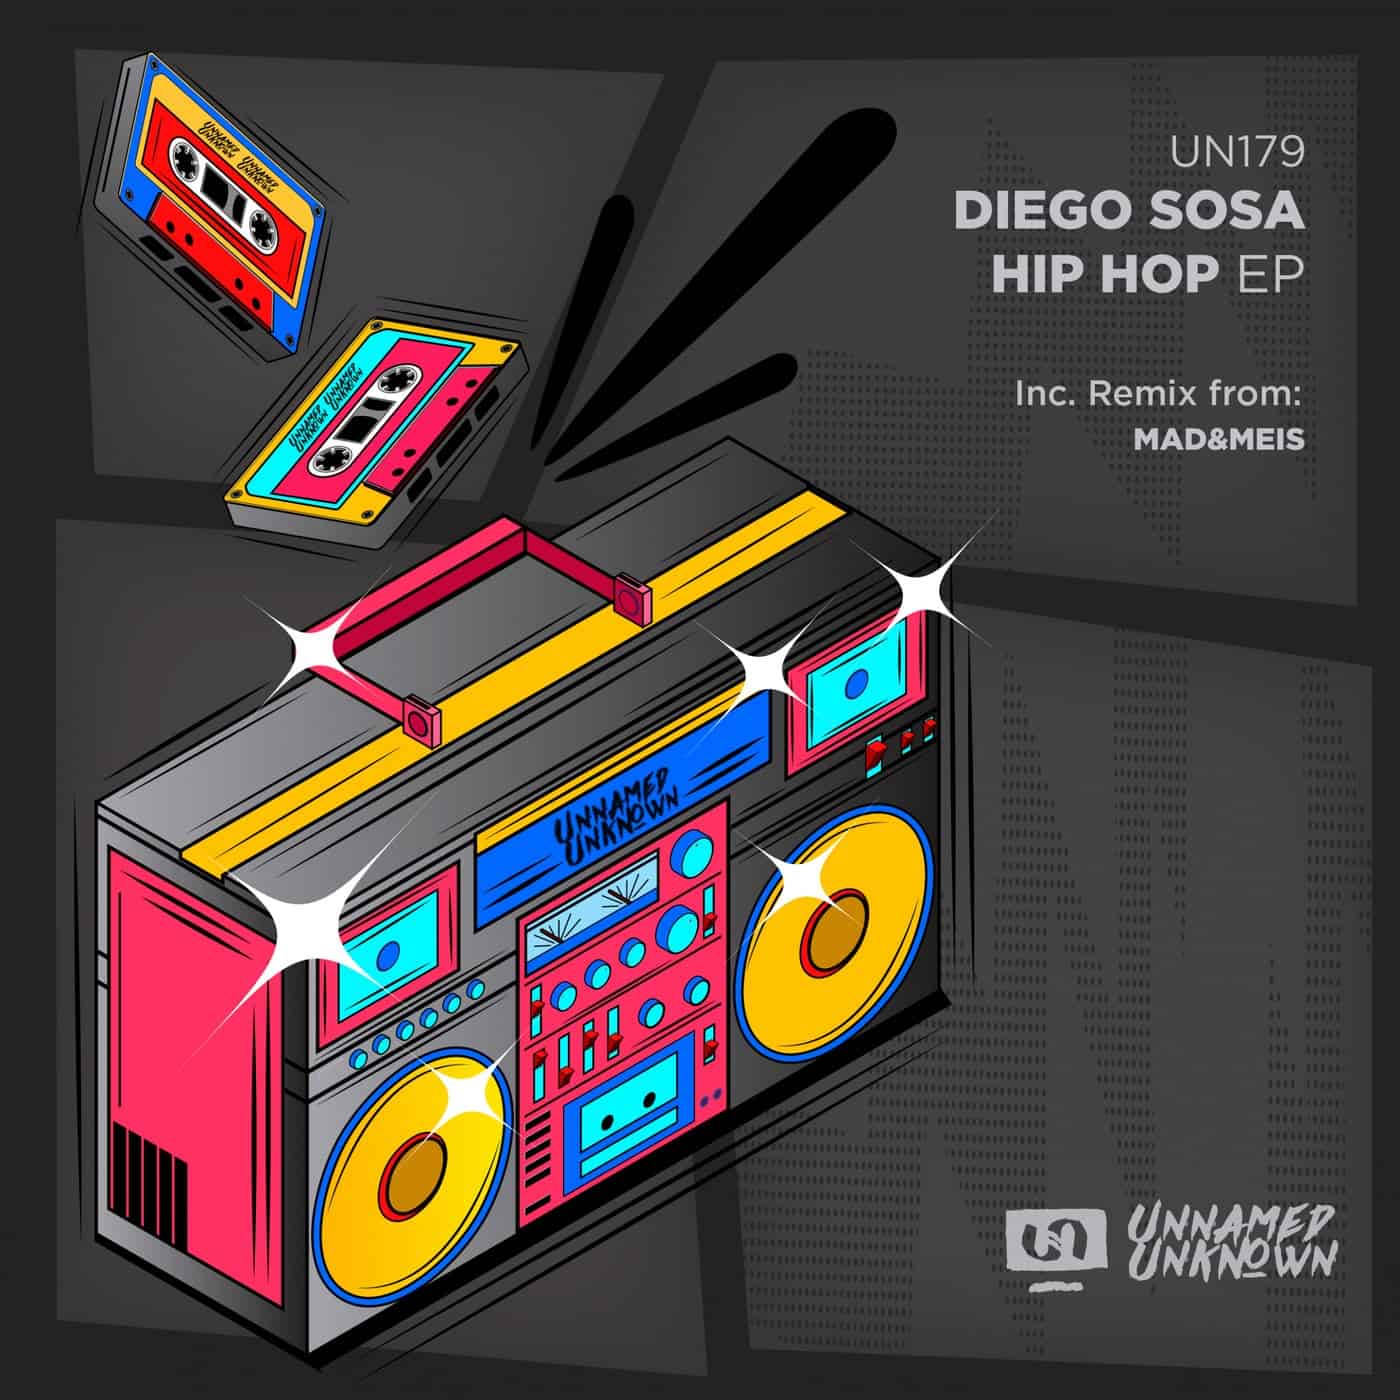 image cover: Diego Sosa - Hip Hop / UN179